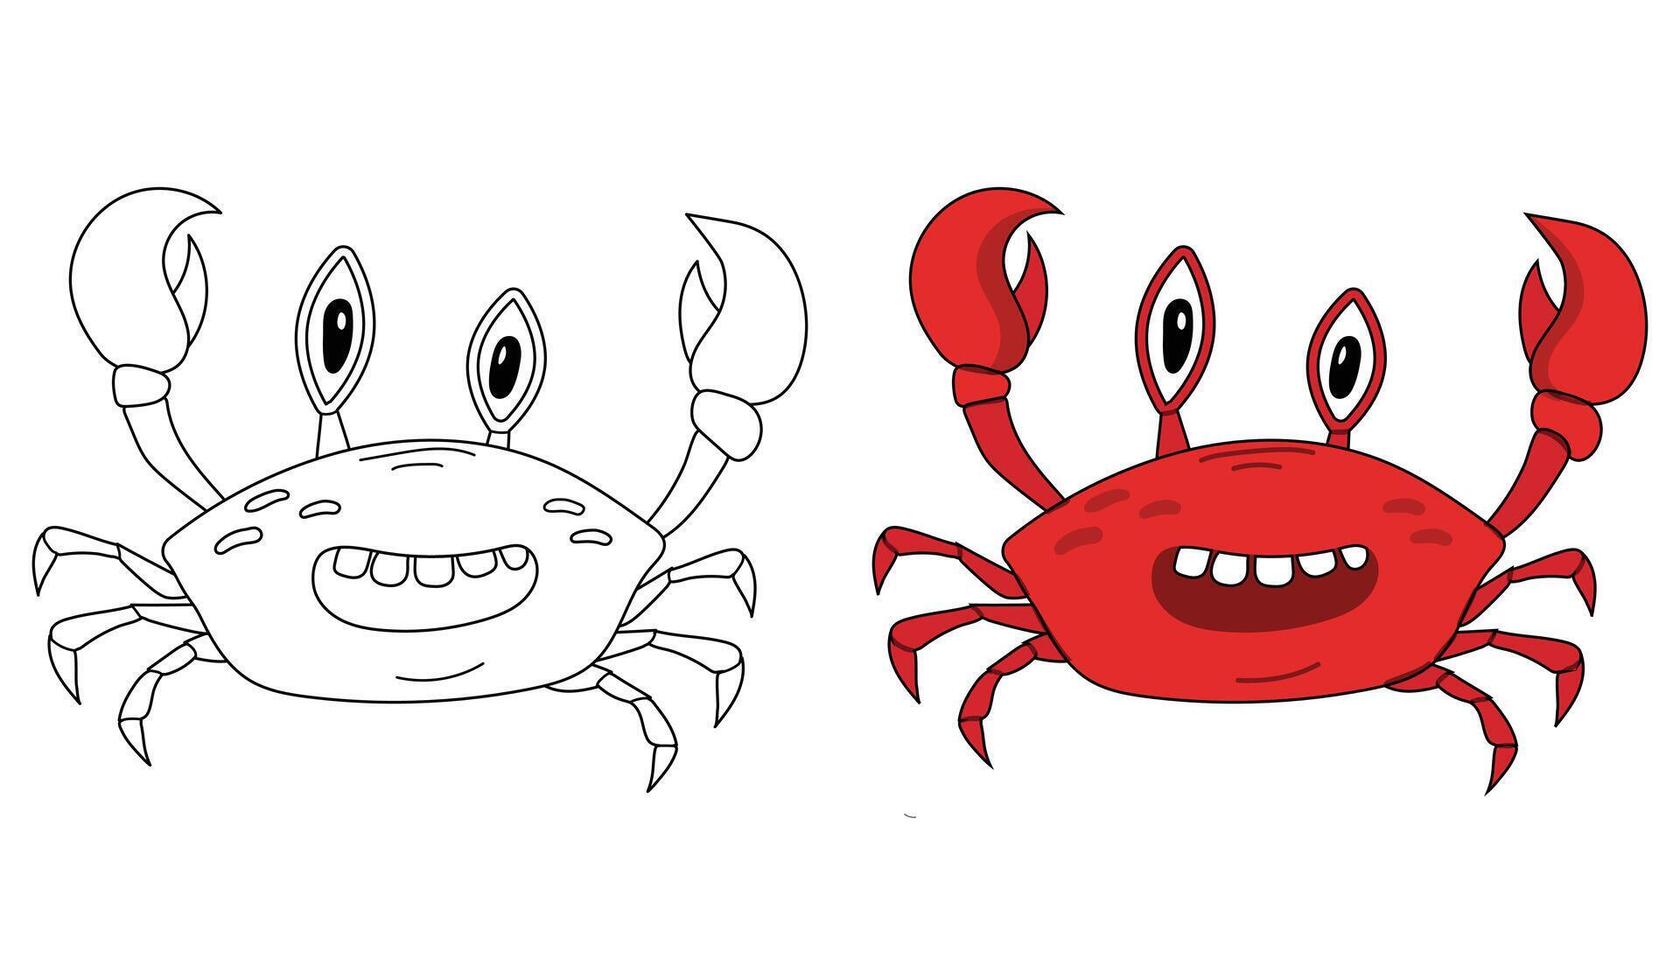 Coloring page with cartoon crab vector